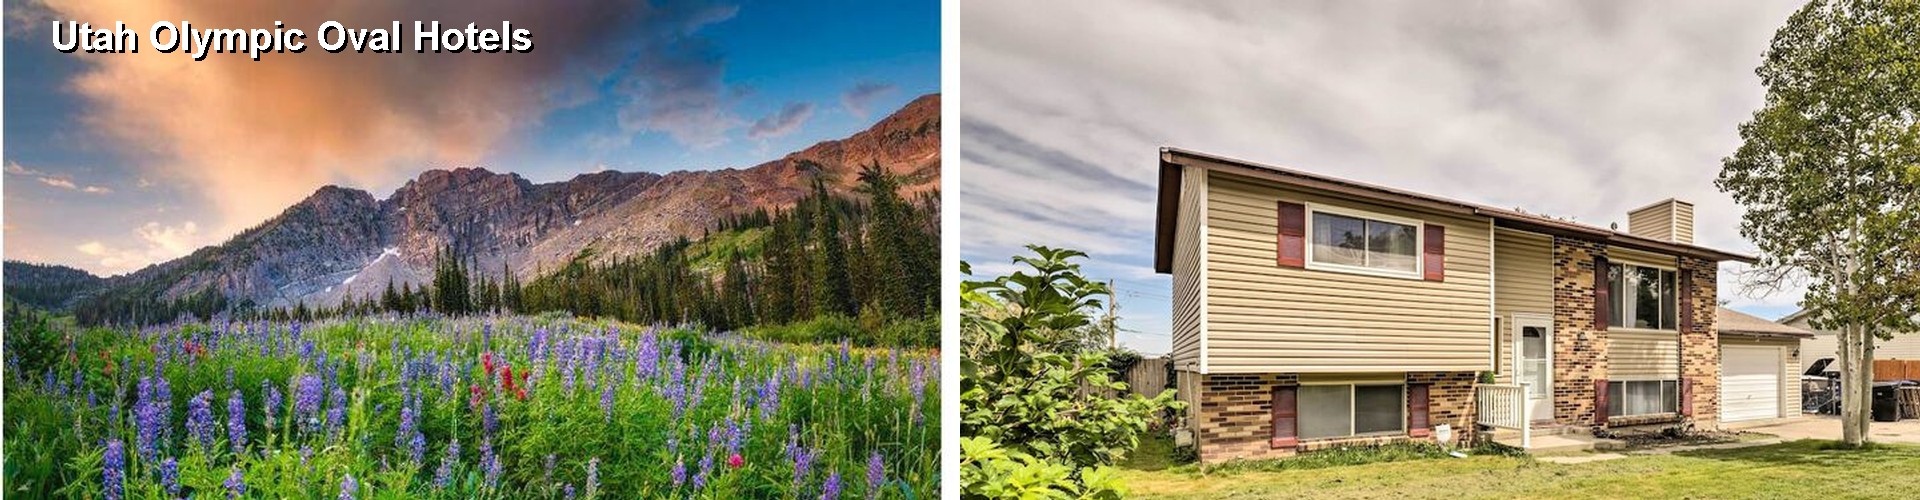 5 Best Hotels near Utah Olympic Oval